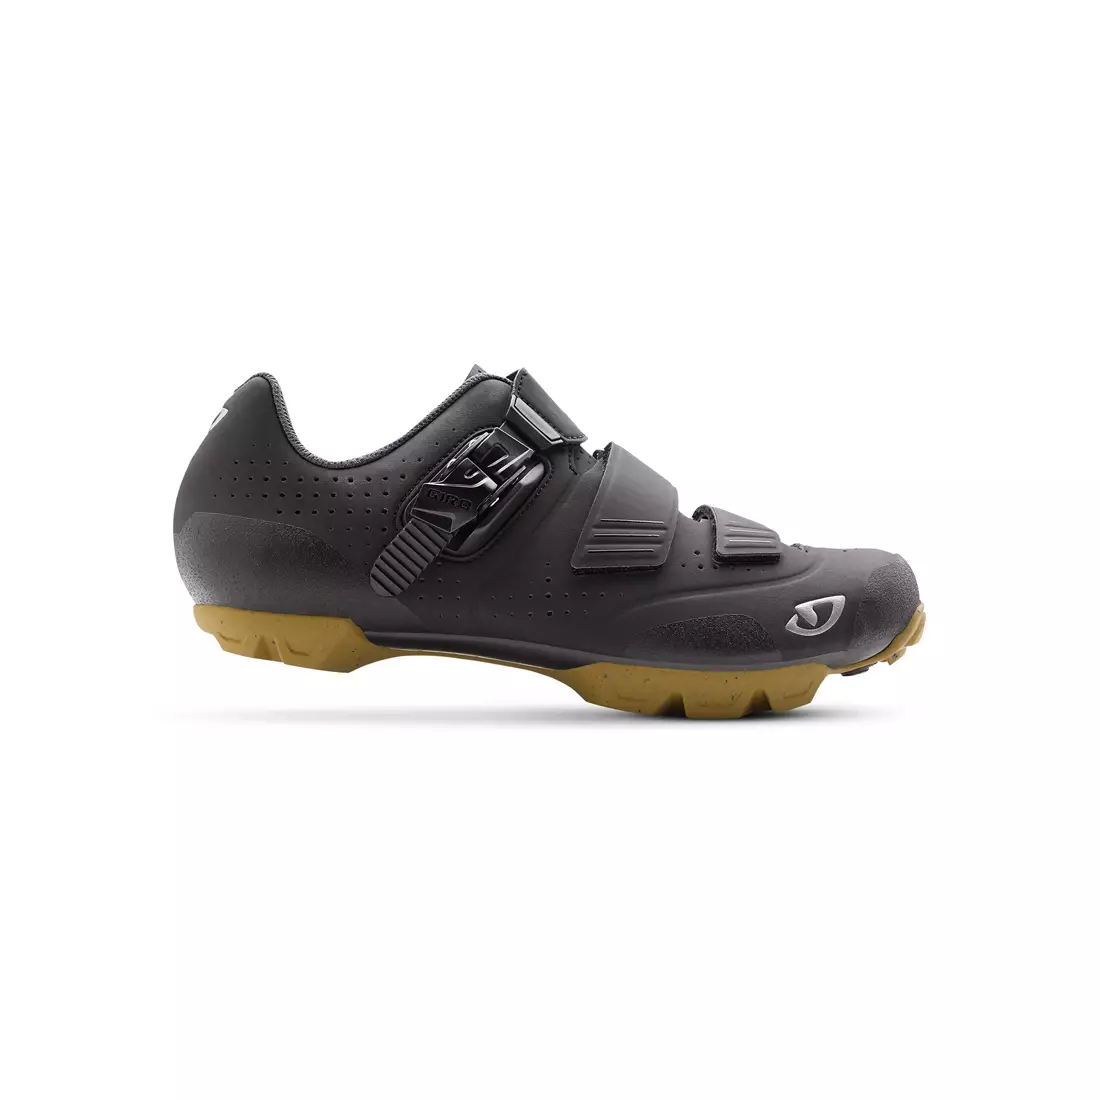 Pantofi de ciclism pentru bărbați GIRO PRIVATEER R black gum 